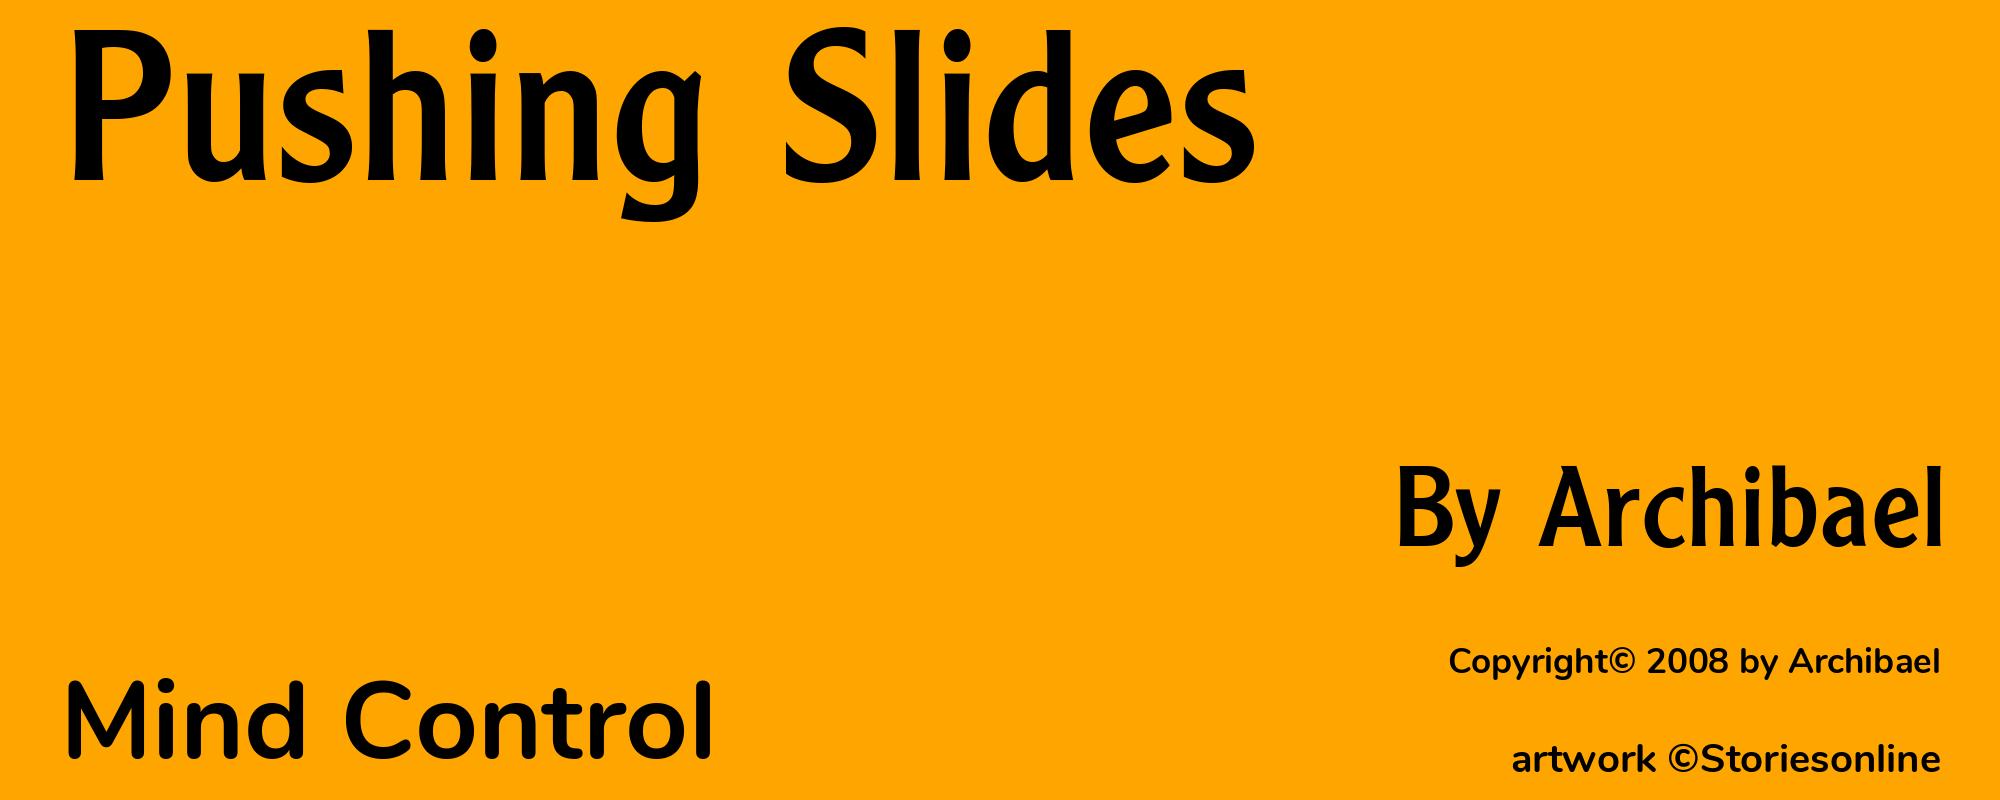 Pushing Slides - Cover